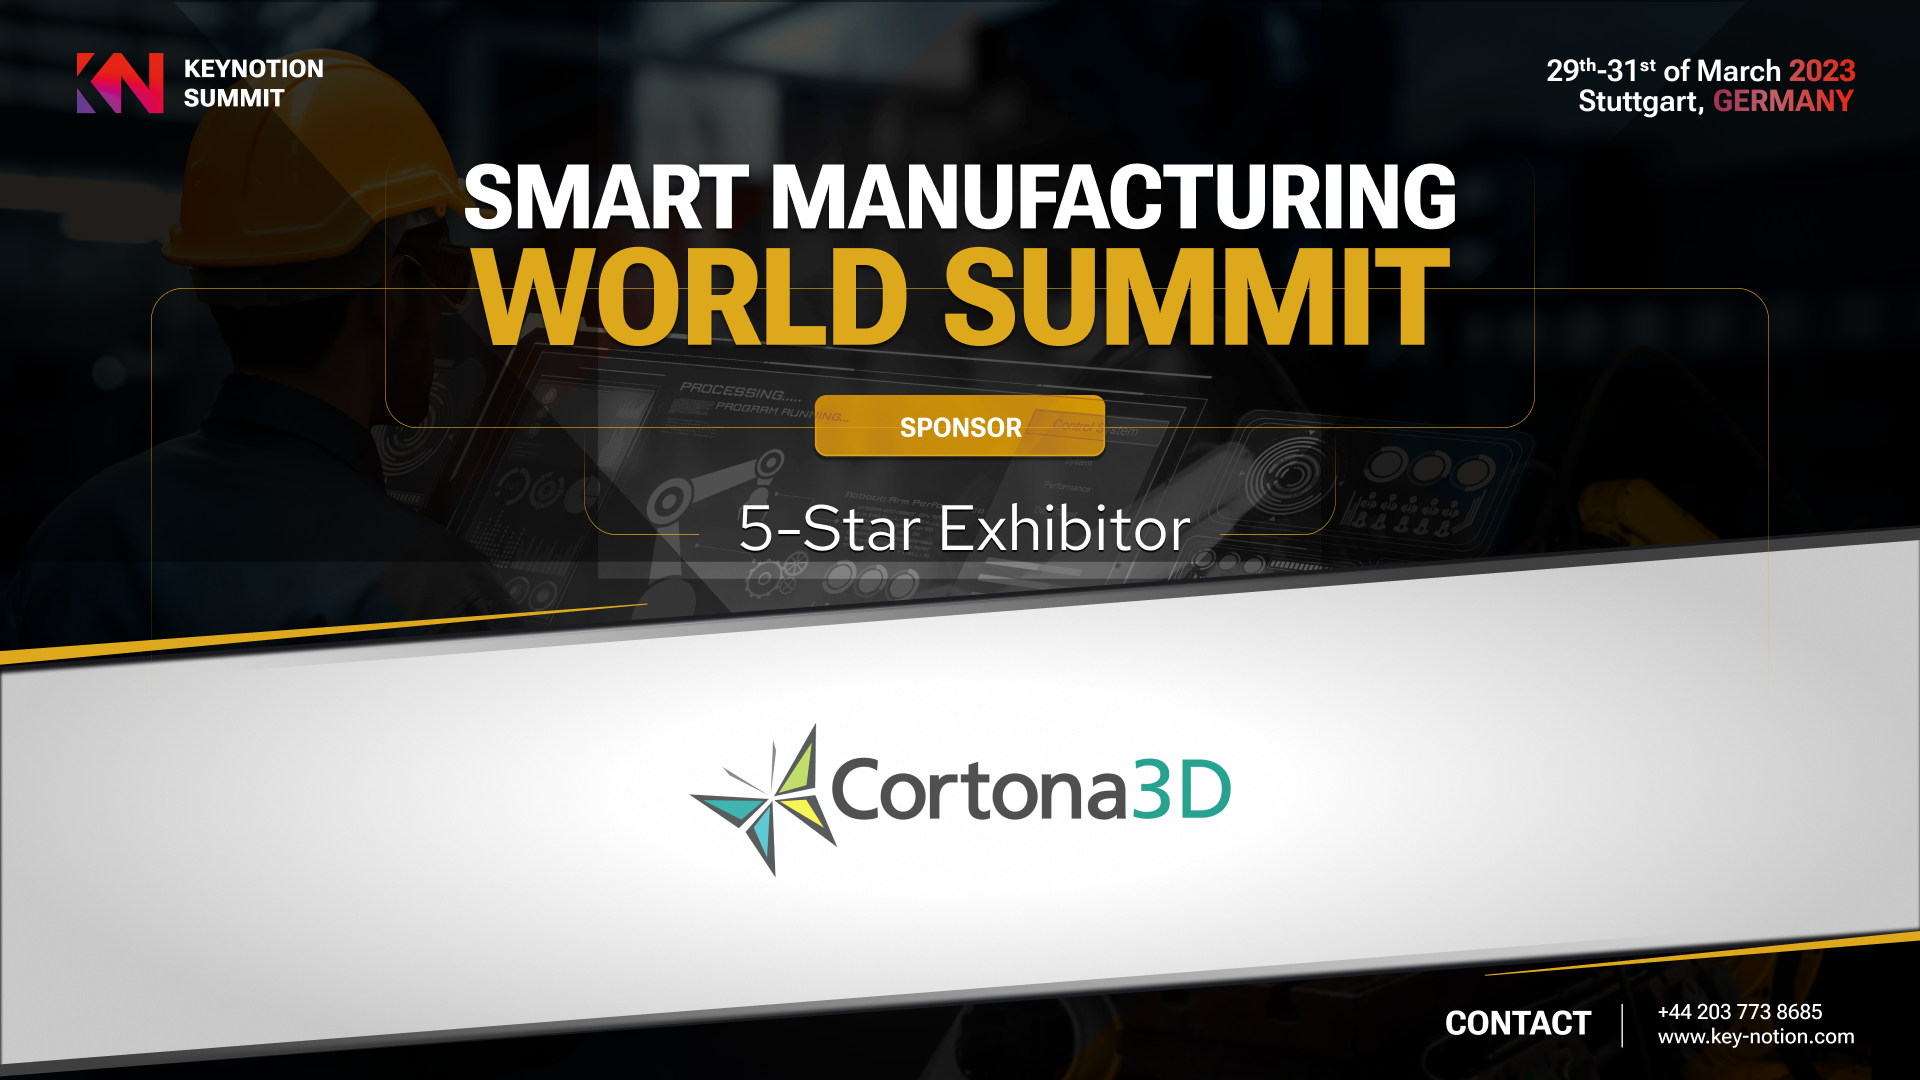 Cortona3D Exhibitor at Smart Manufacturing World Summit 2023